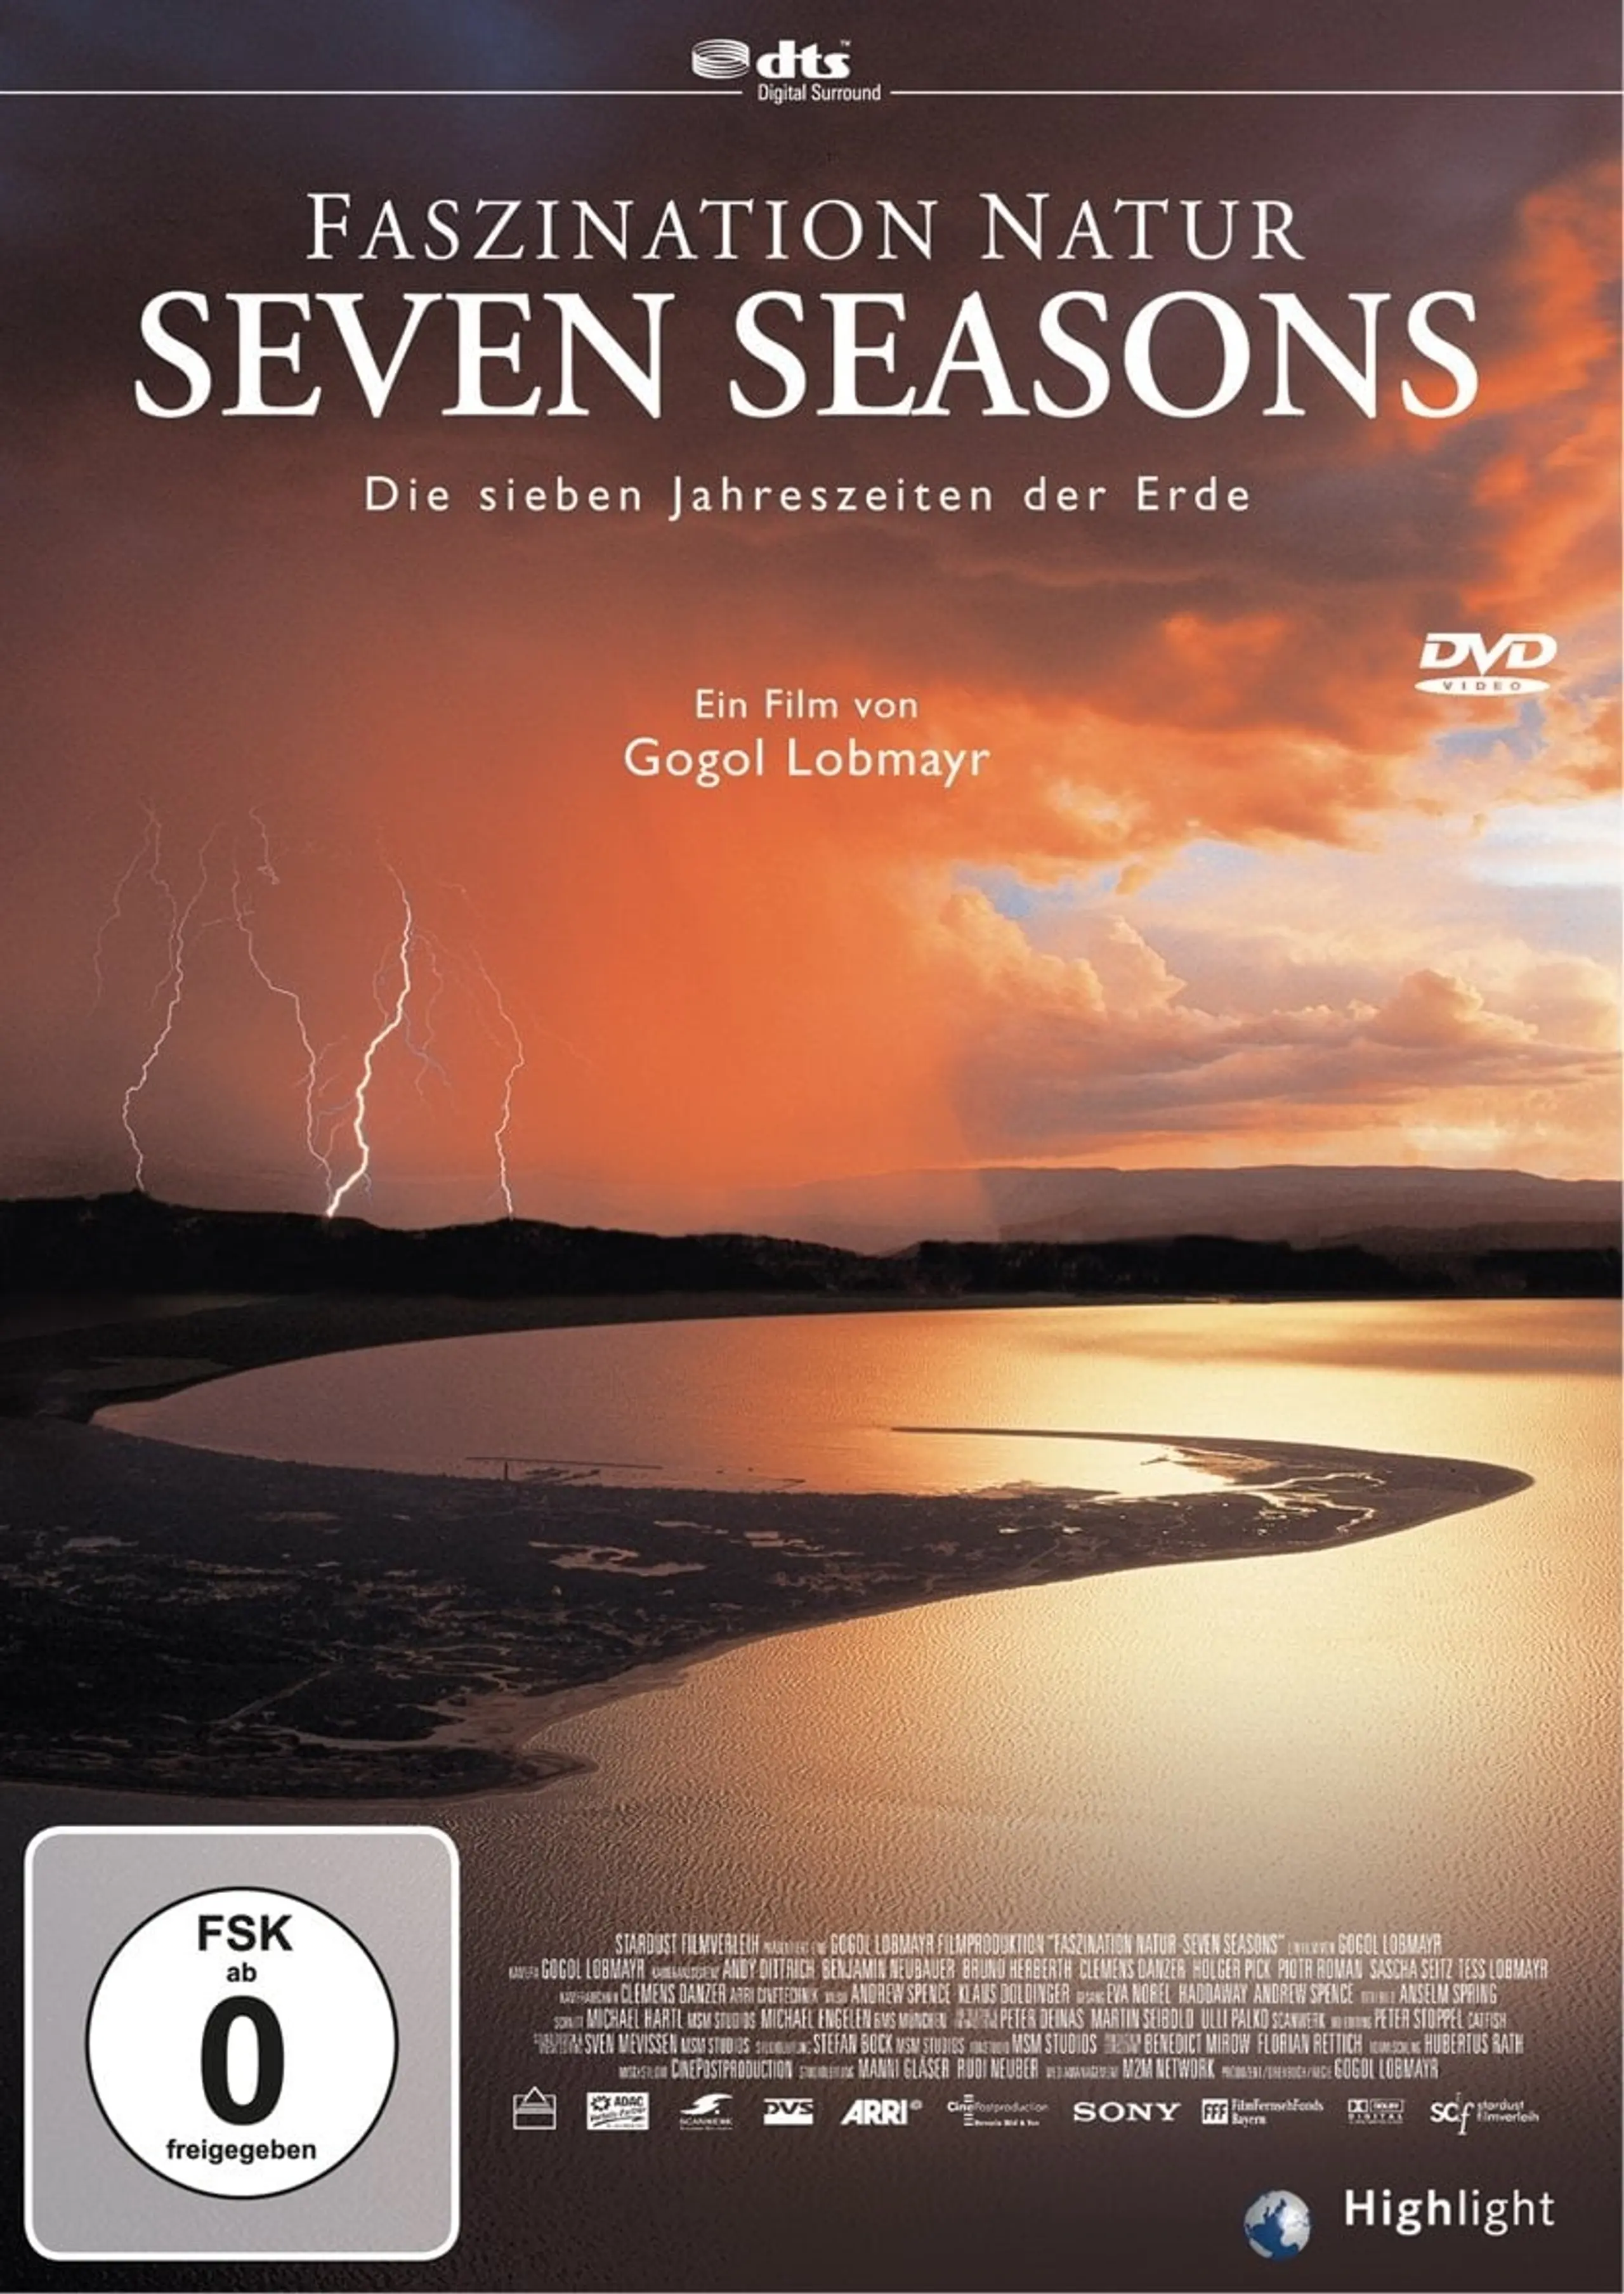 Faszination Natur: Seven Seasons